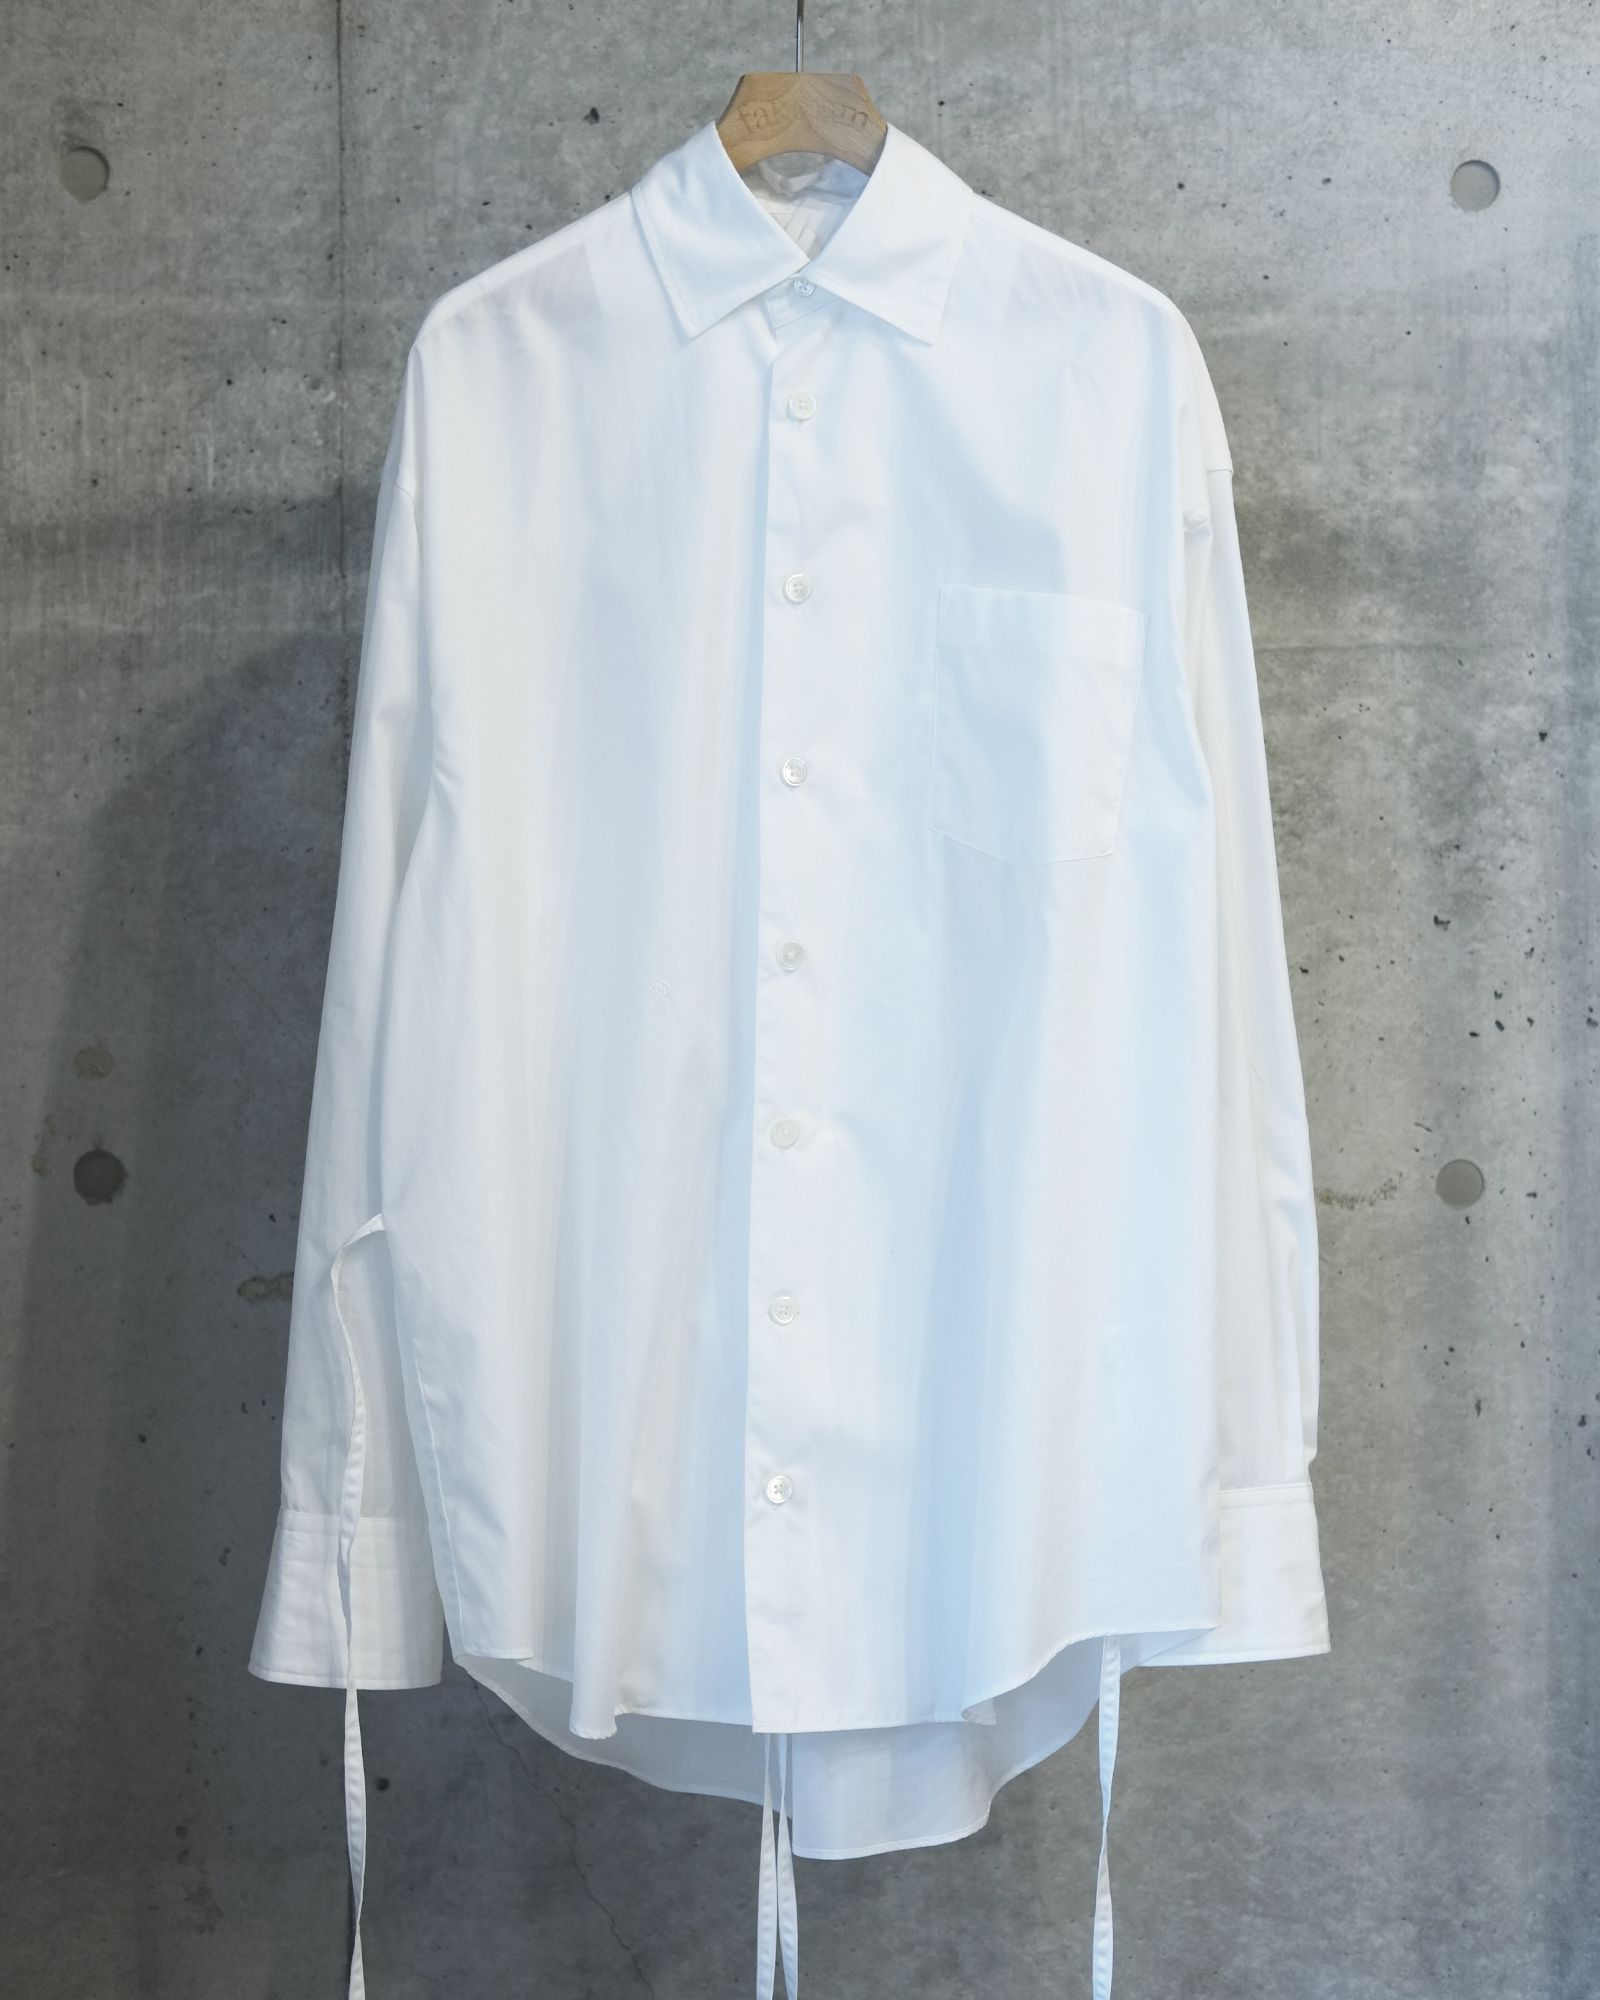 SOSHIOTSUKI - The Kimono Breasted Shirt Wide | fakejam